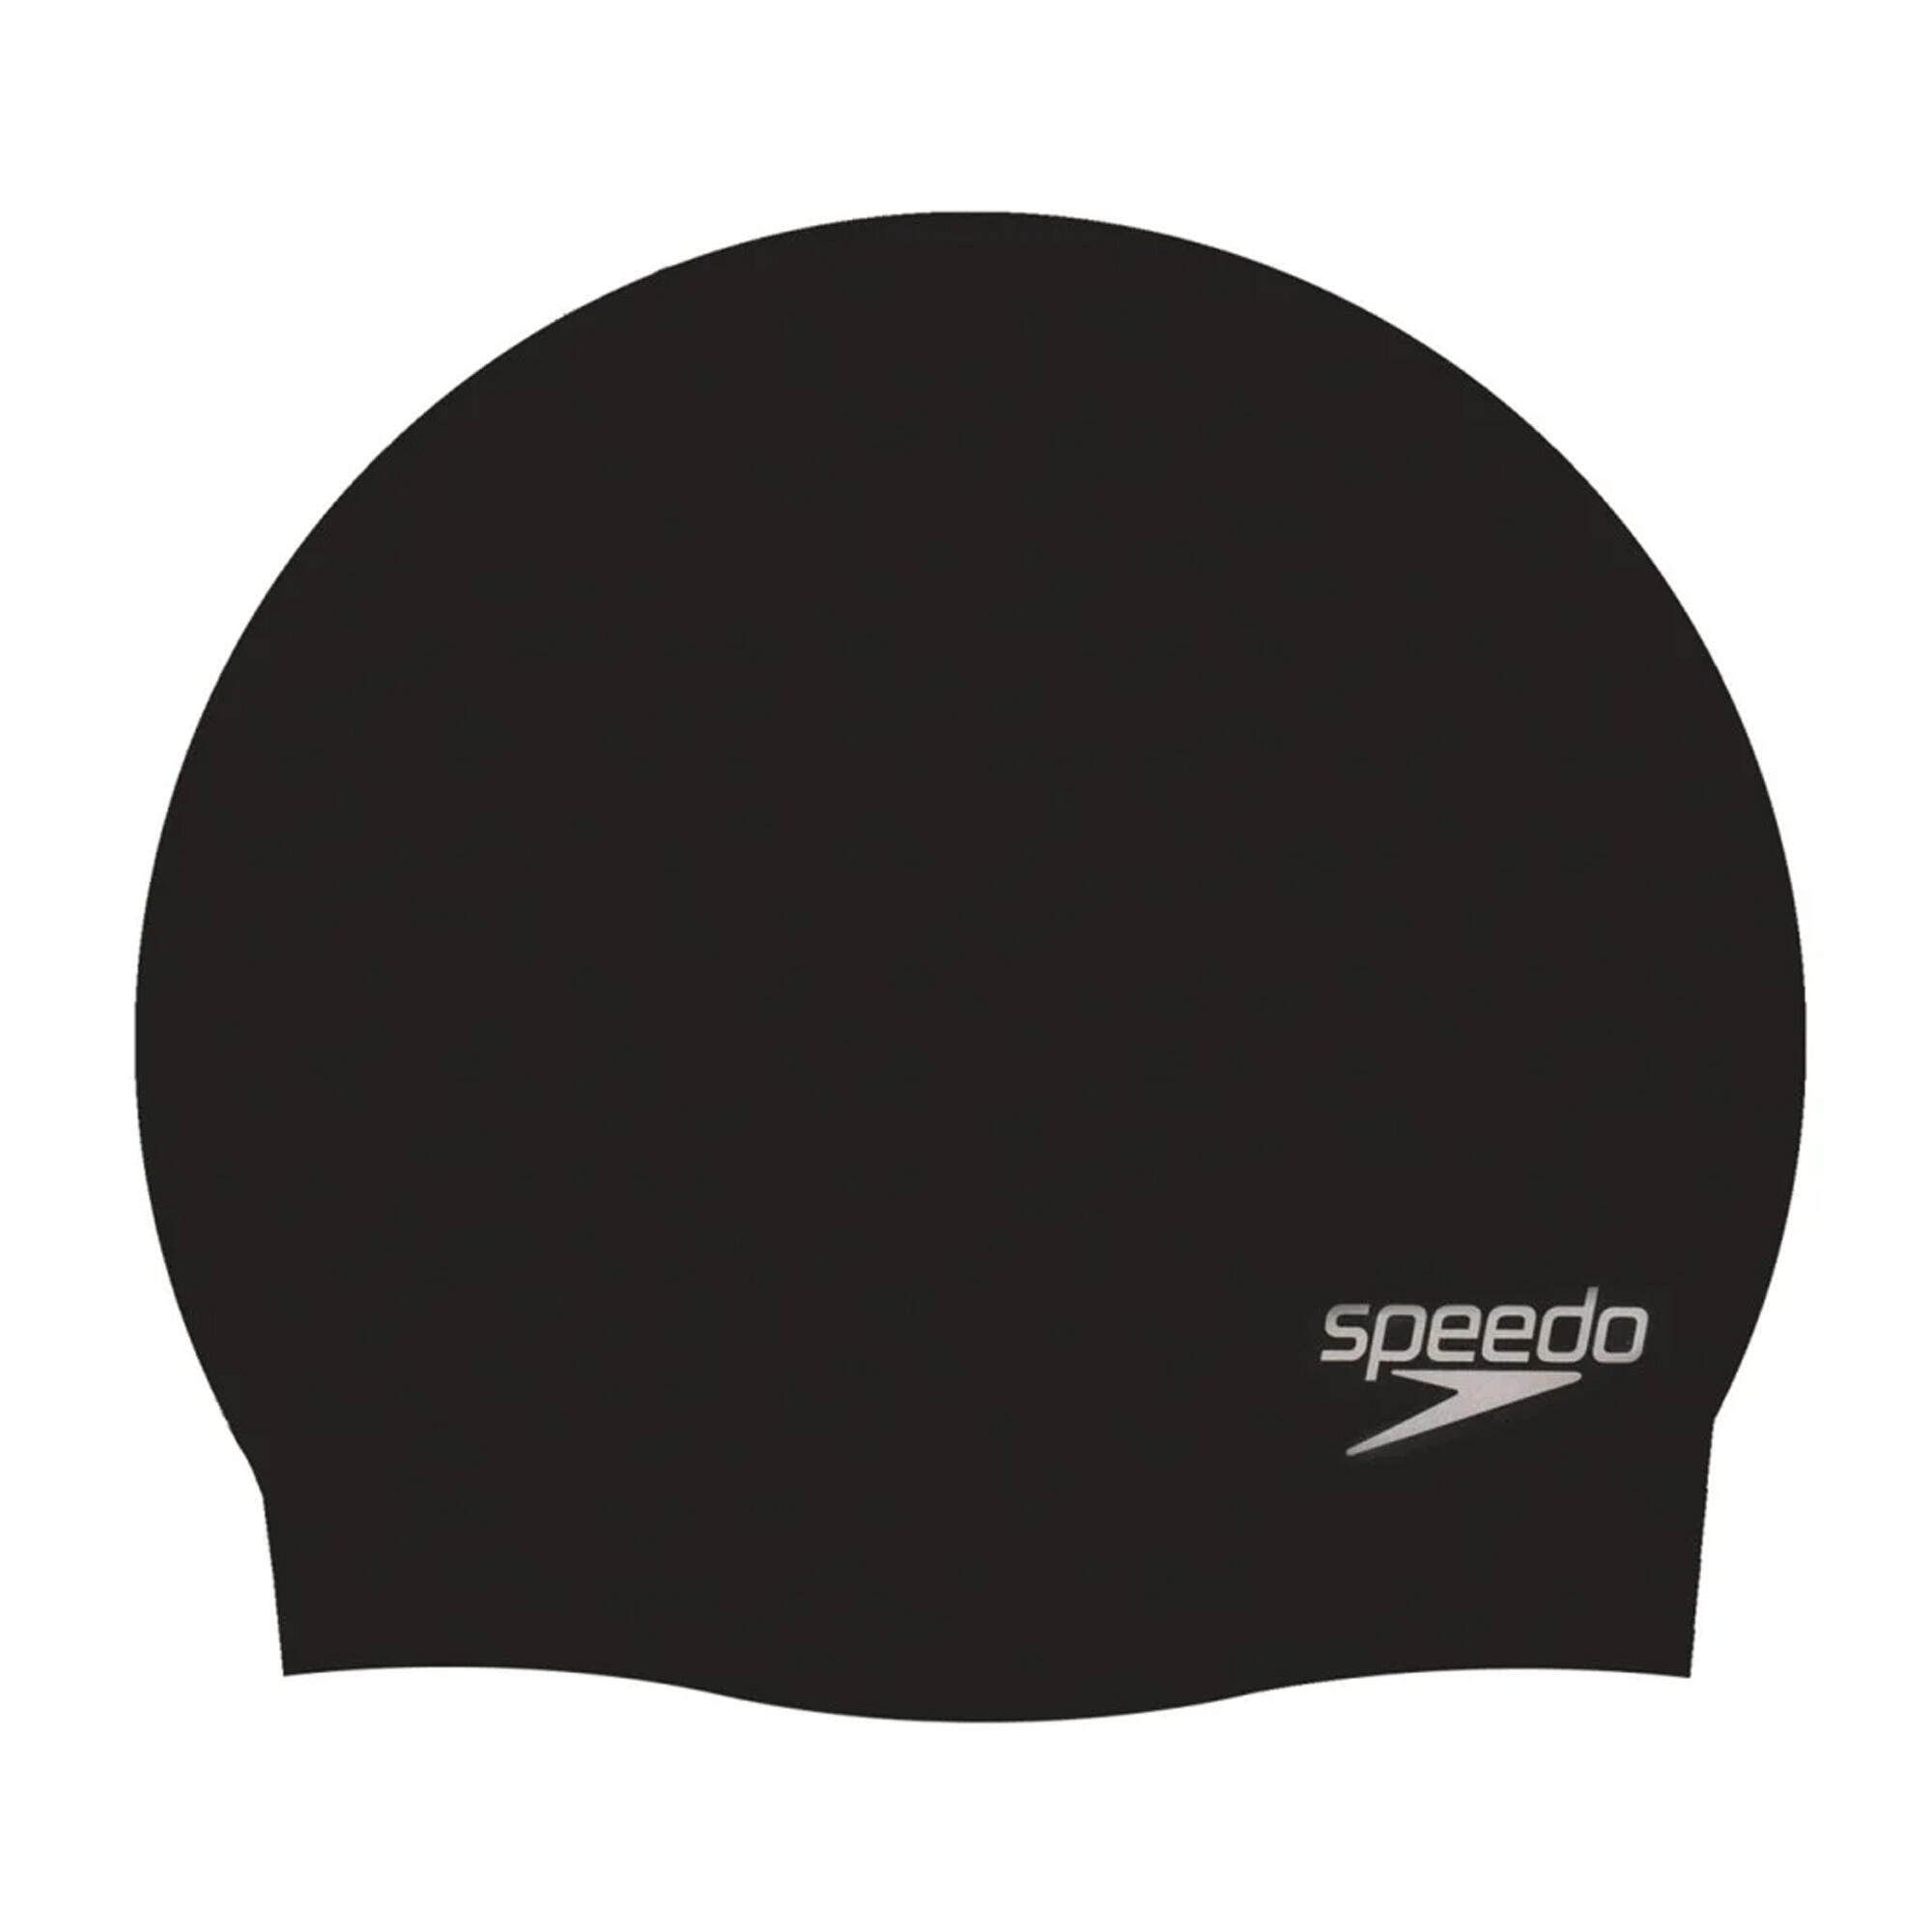 SPEEDO Childrens/Kids Silicone Swim Cap (Black)